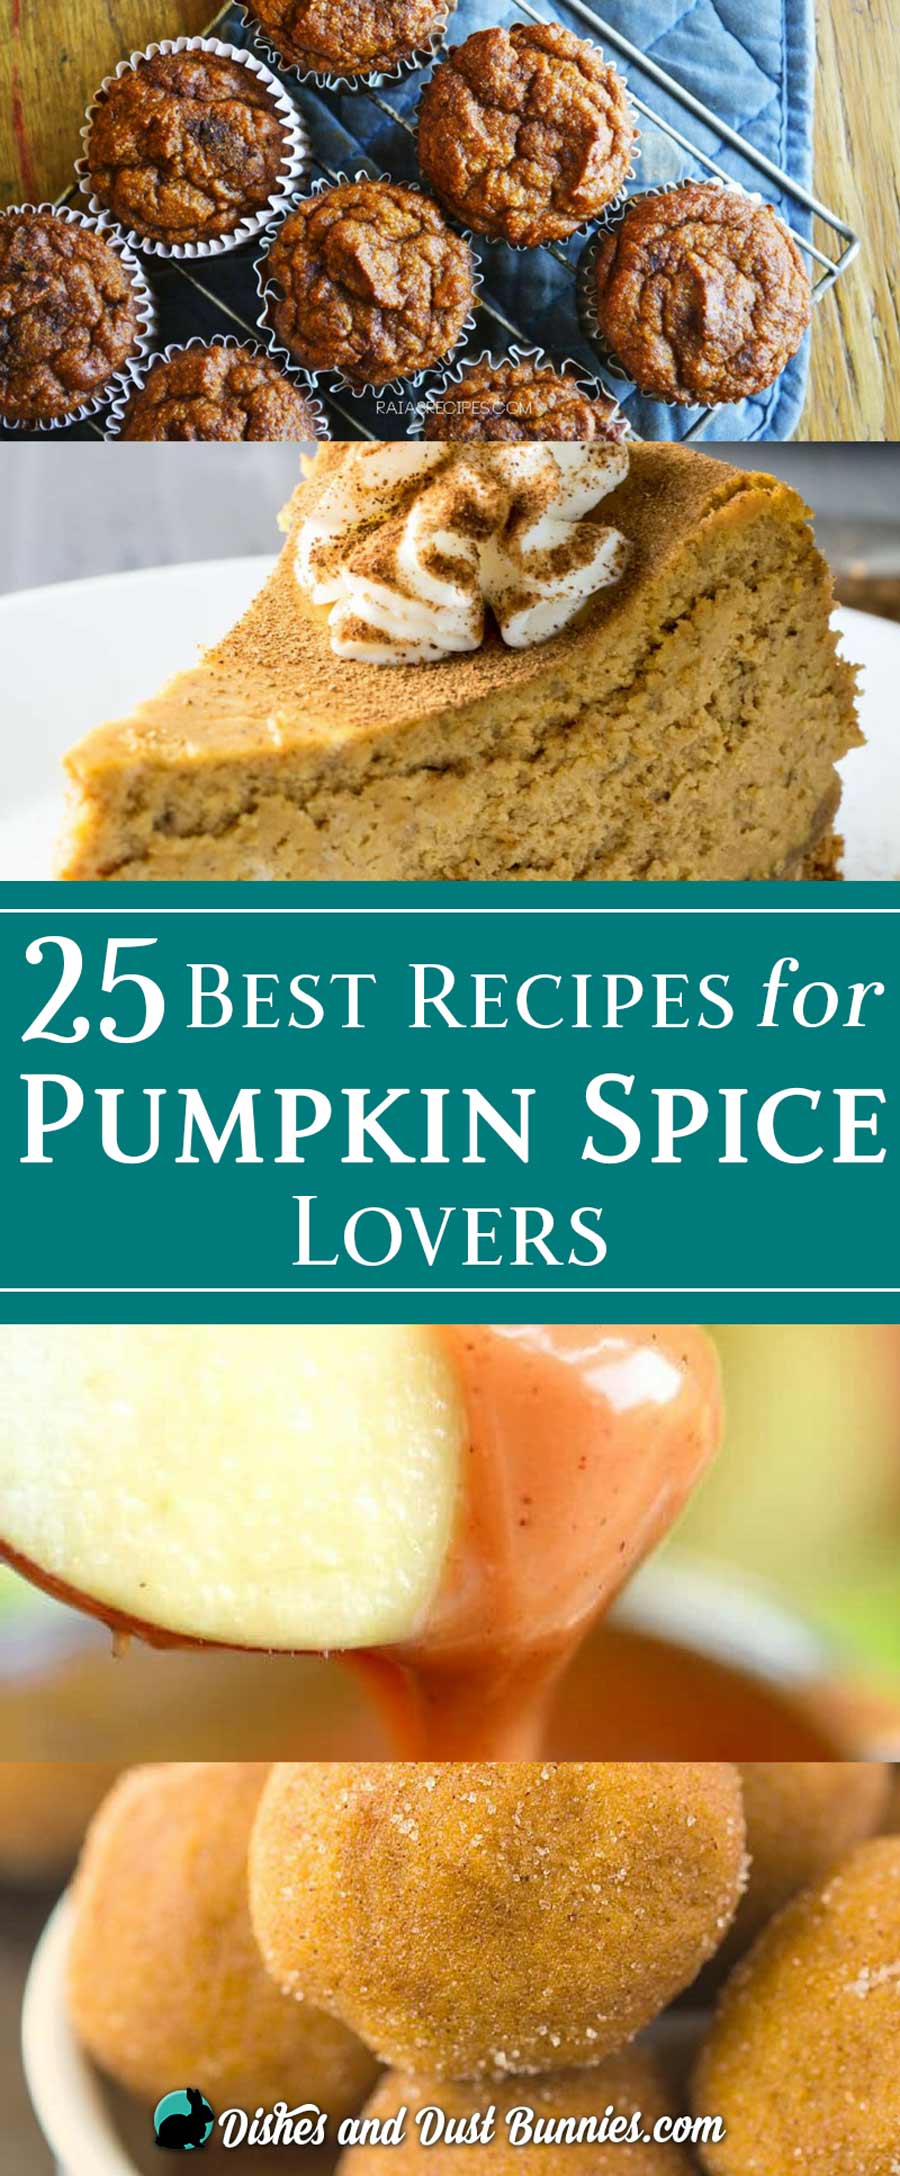 25 Best Recipes for Pumpkin Spice Lovers - dishesanddustbunnies.com